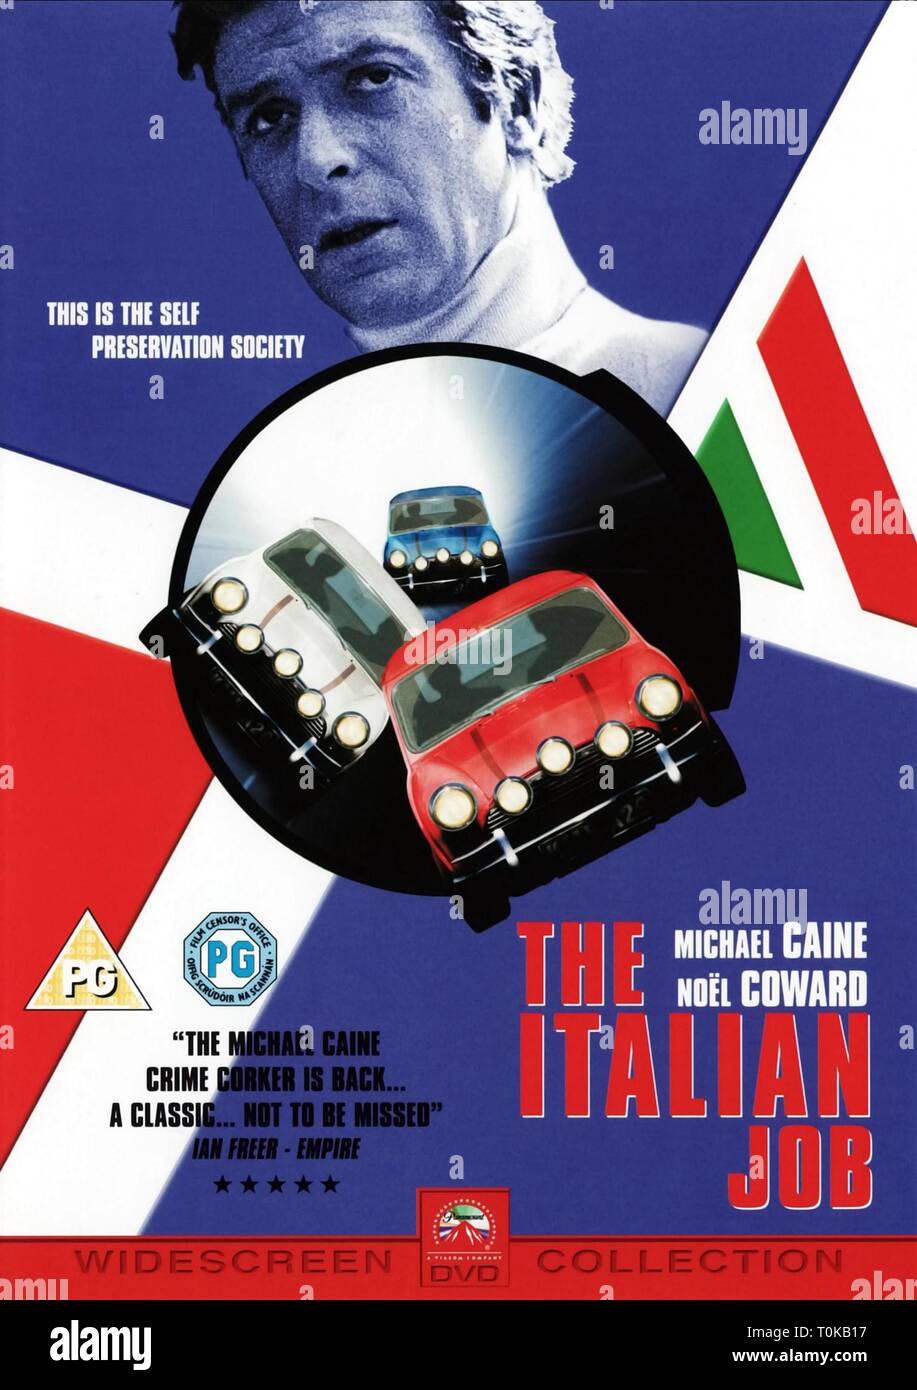 the italian job 2003 poster